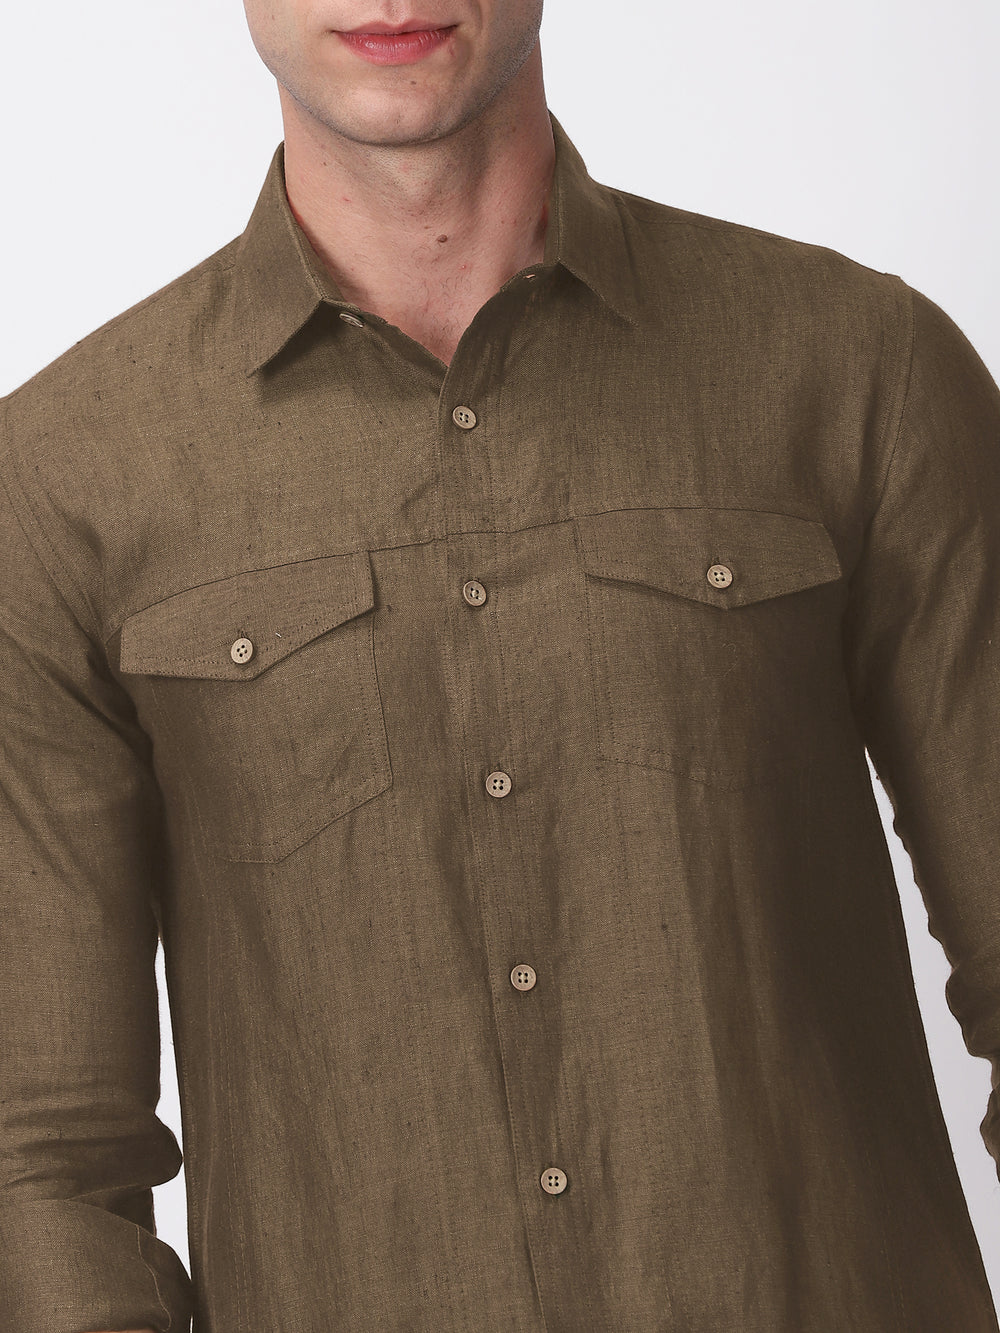 Thomas - Pure Linen Double Pocket Full Sleeve Shirt - Hazelnut Brown